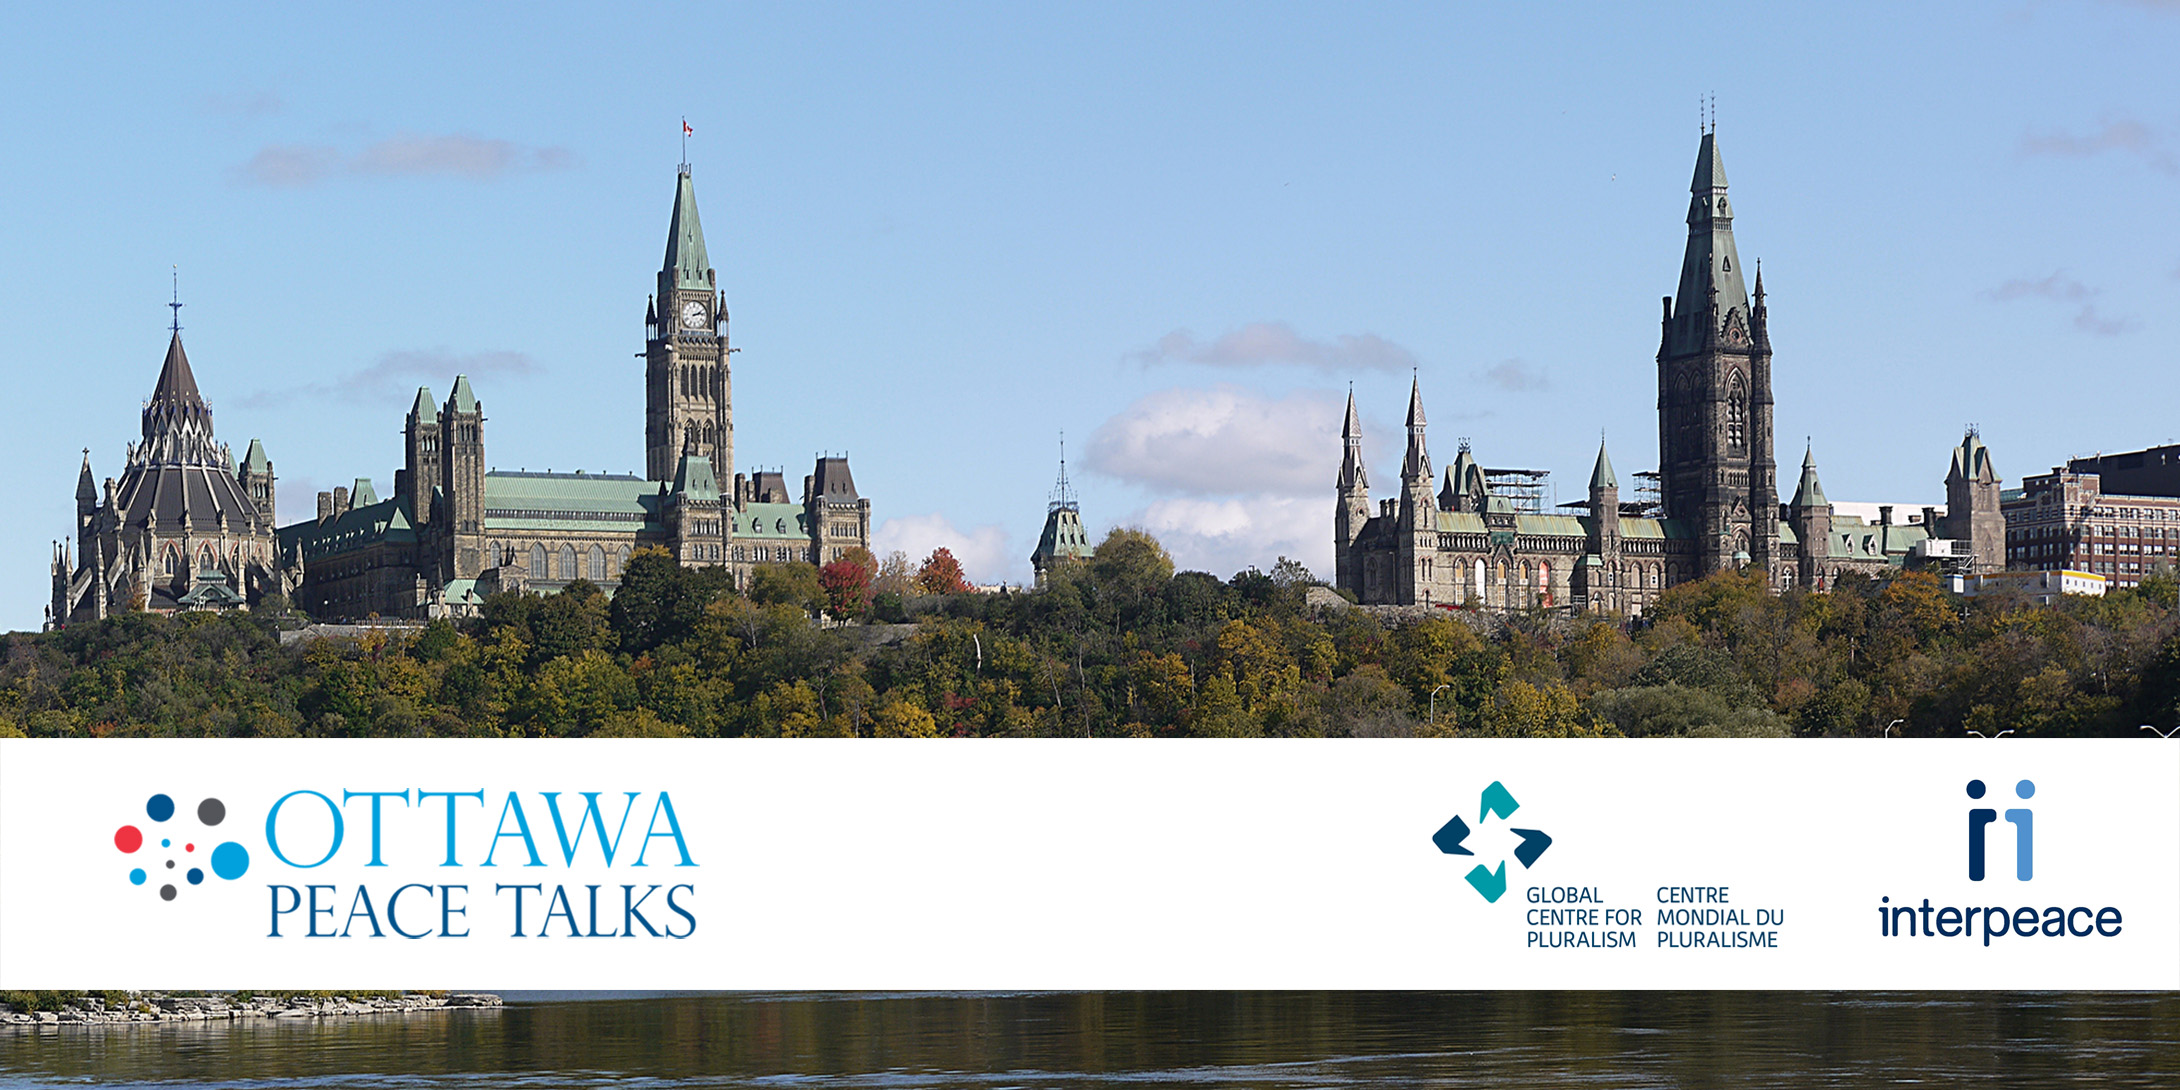 Let’s build peace through diversity at the Ottawa Peace Talks 2016